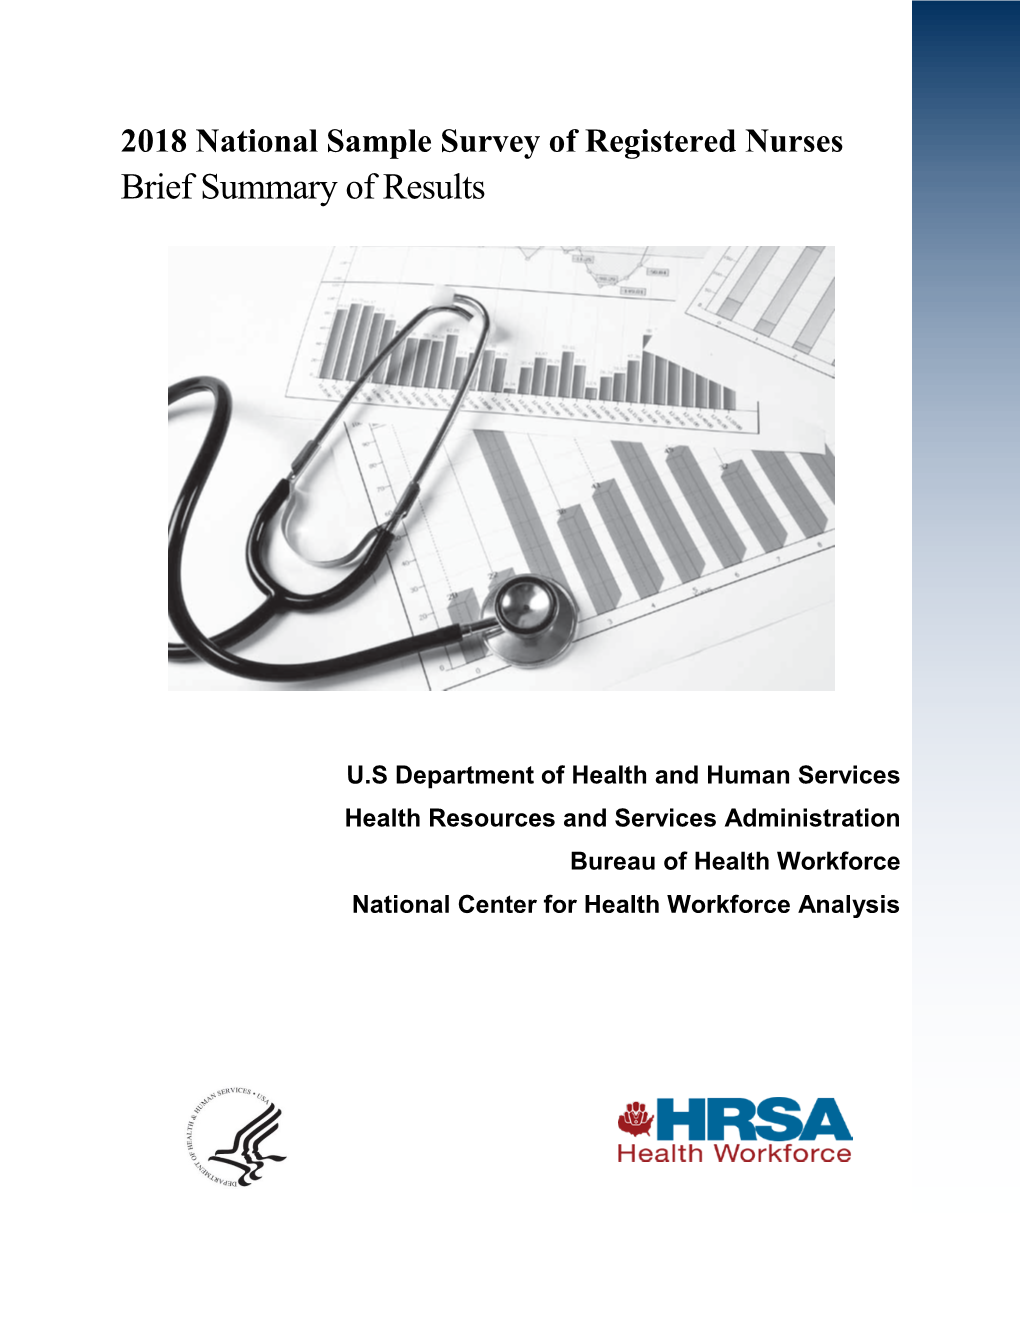 National Sample Survey of Registered Nurses Brief Summary of Results